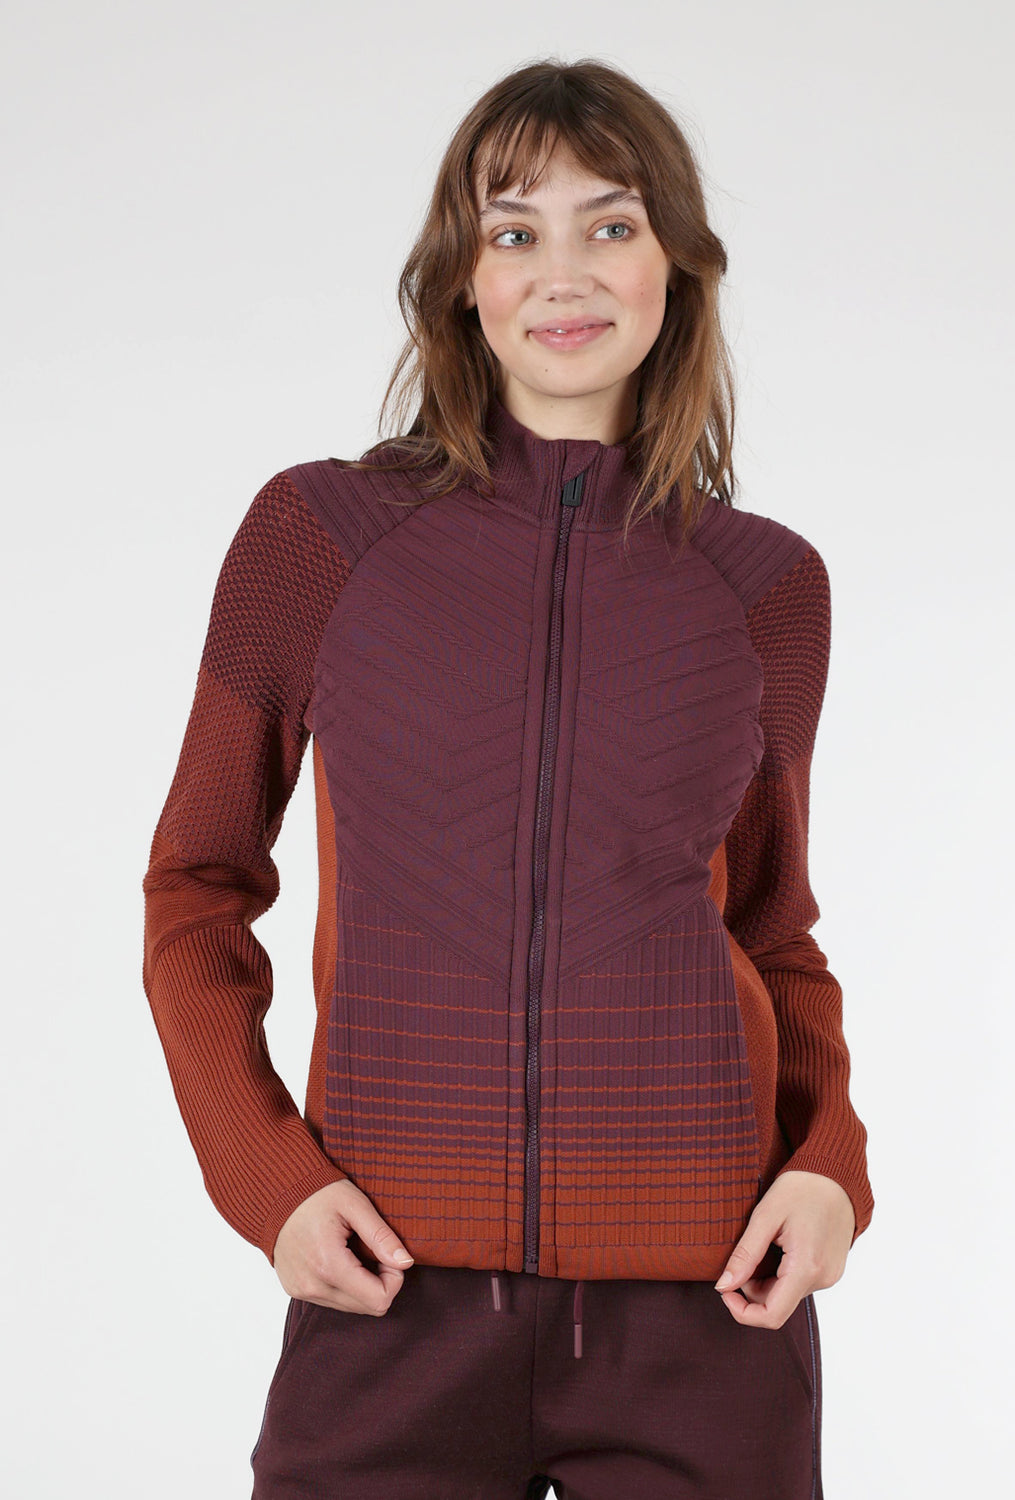 Smartwool Intraknit Merino Insulated Jacket - Women's | MEC